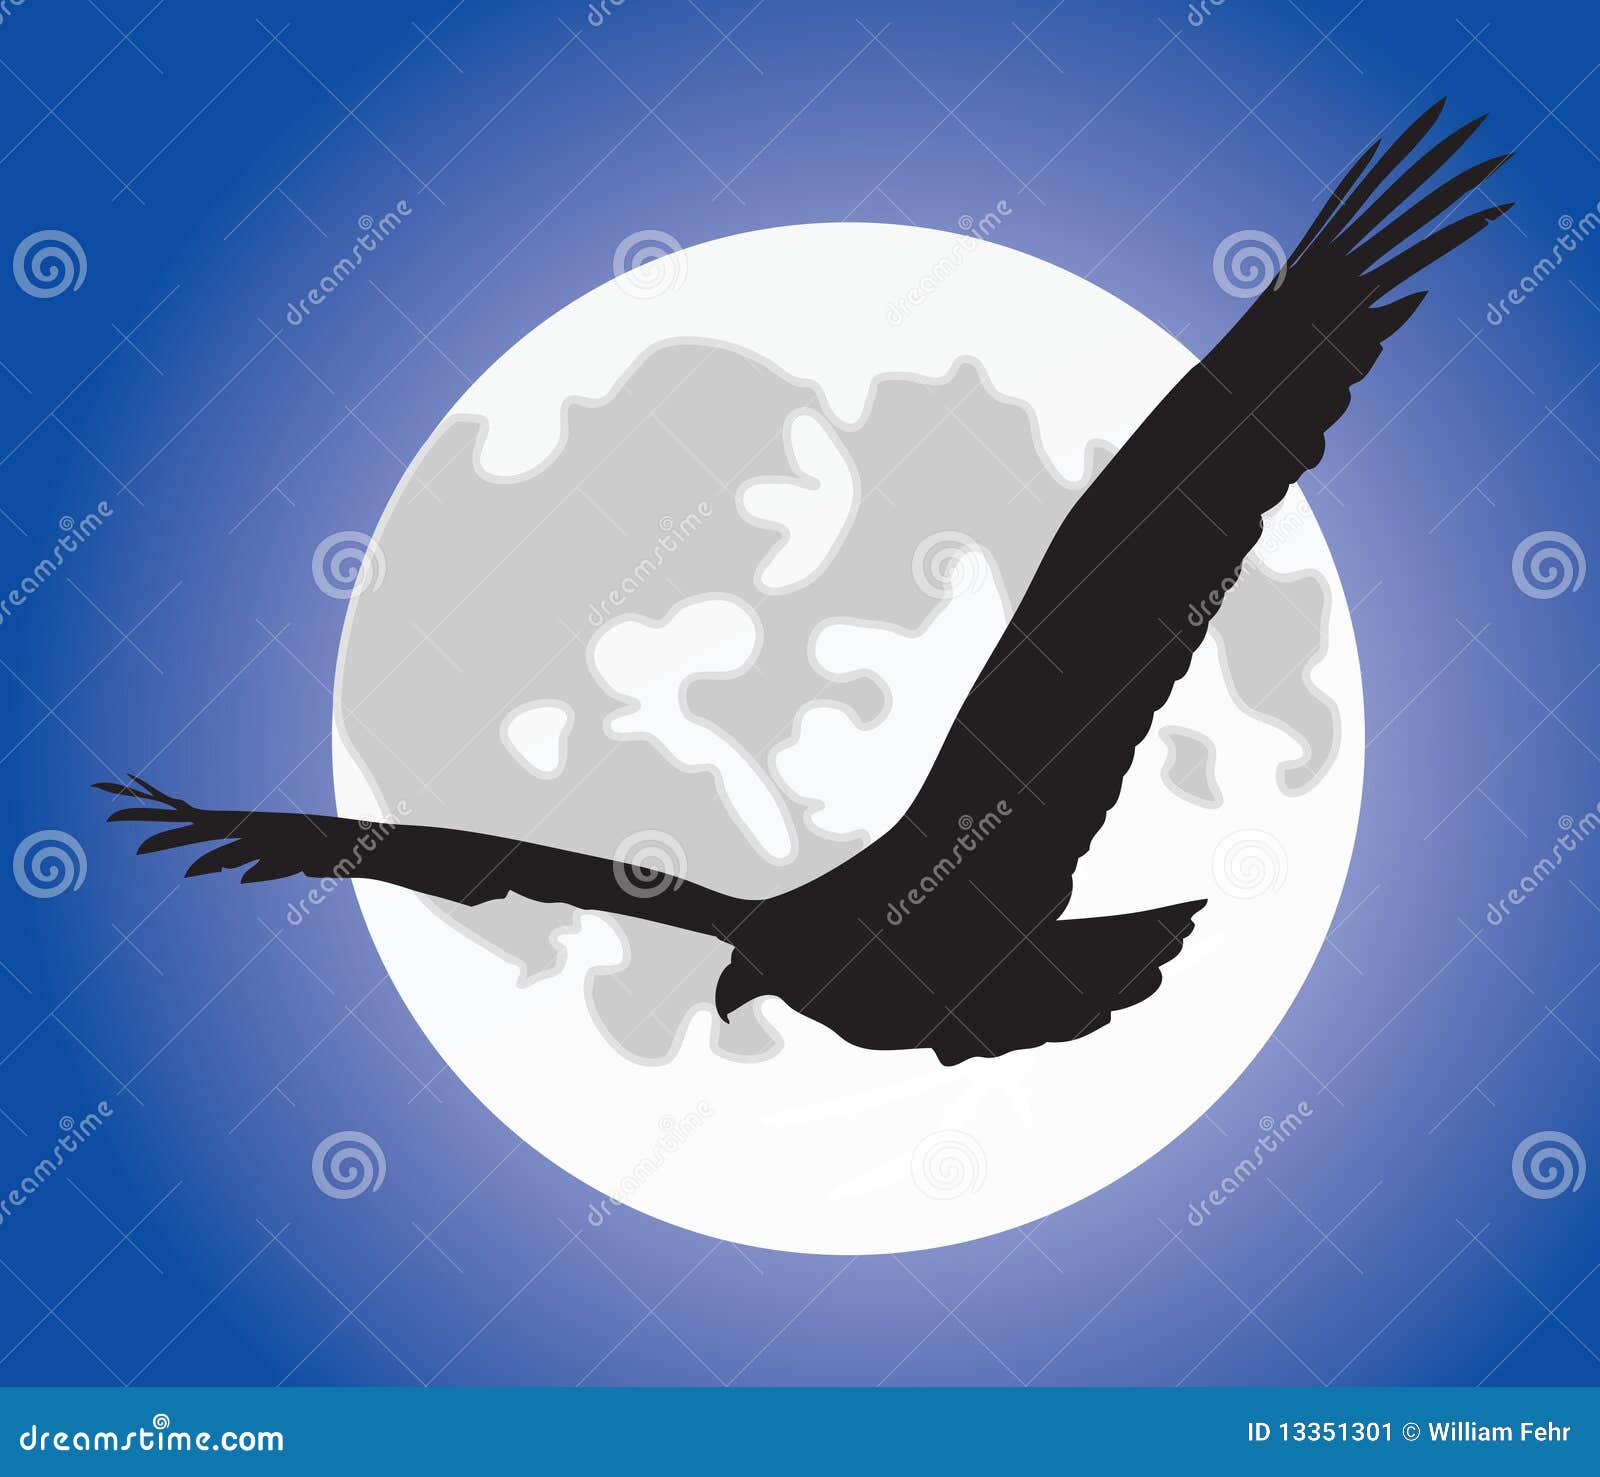 eagle silhouete over moon